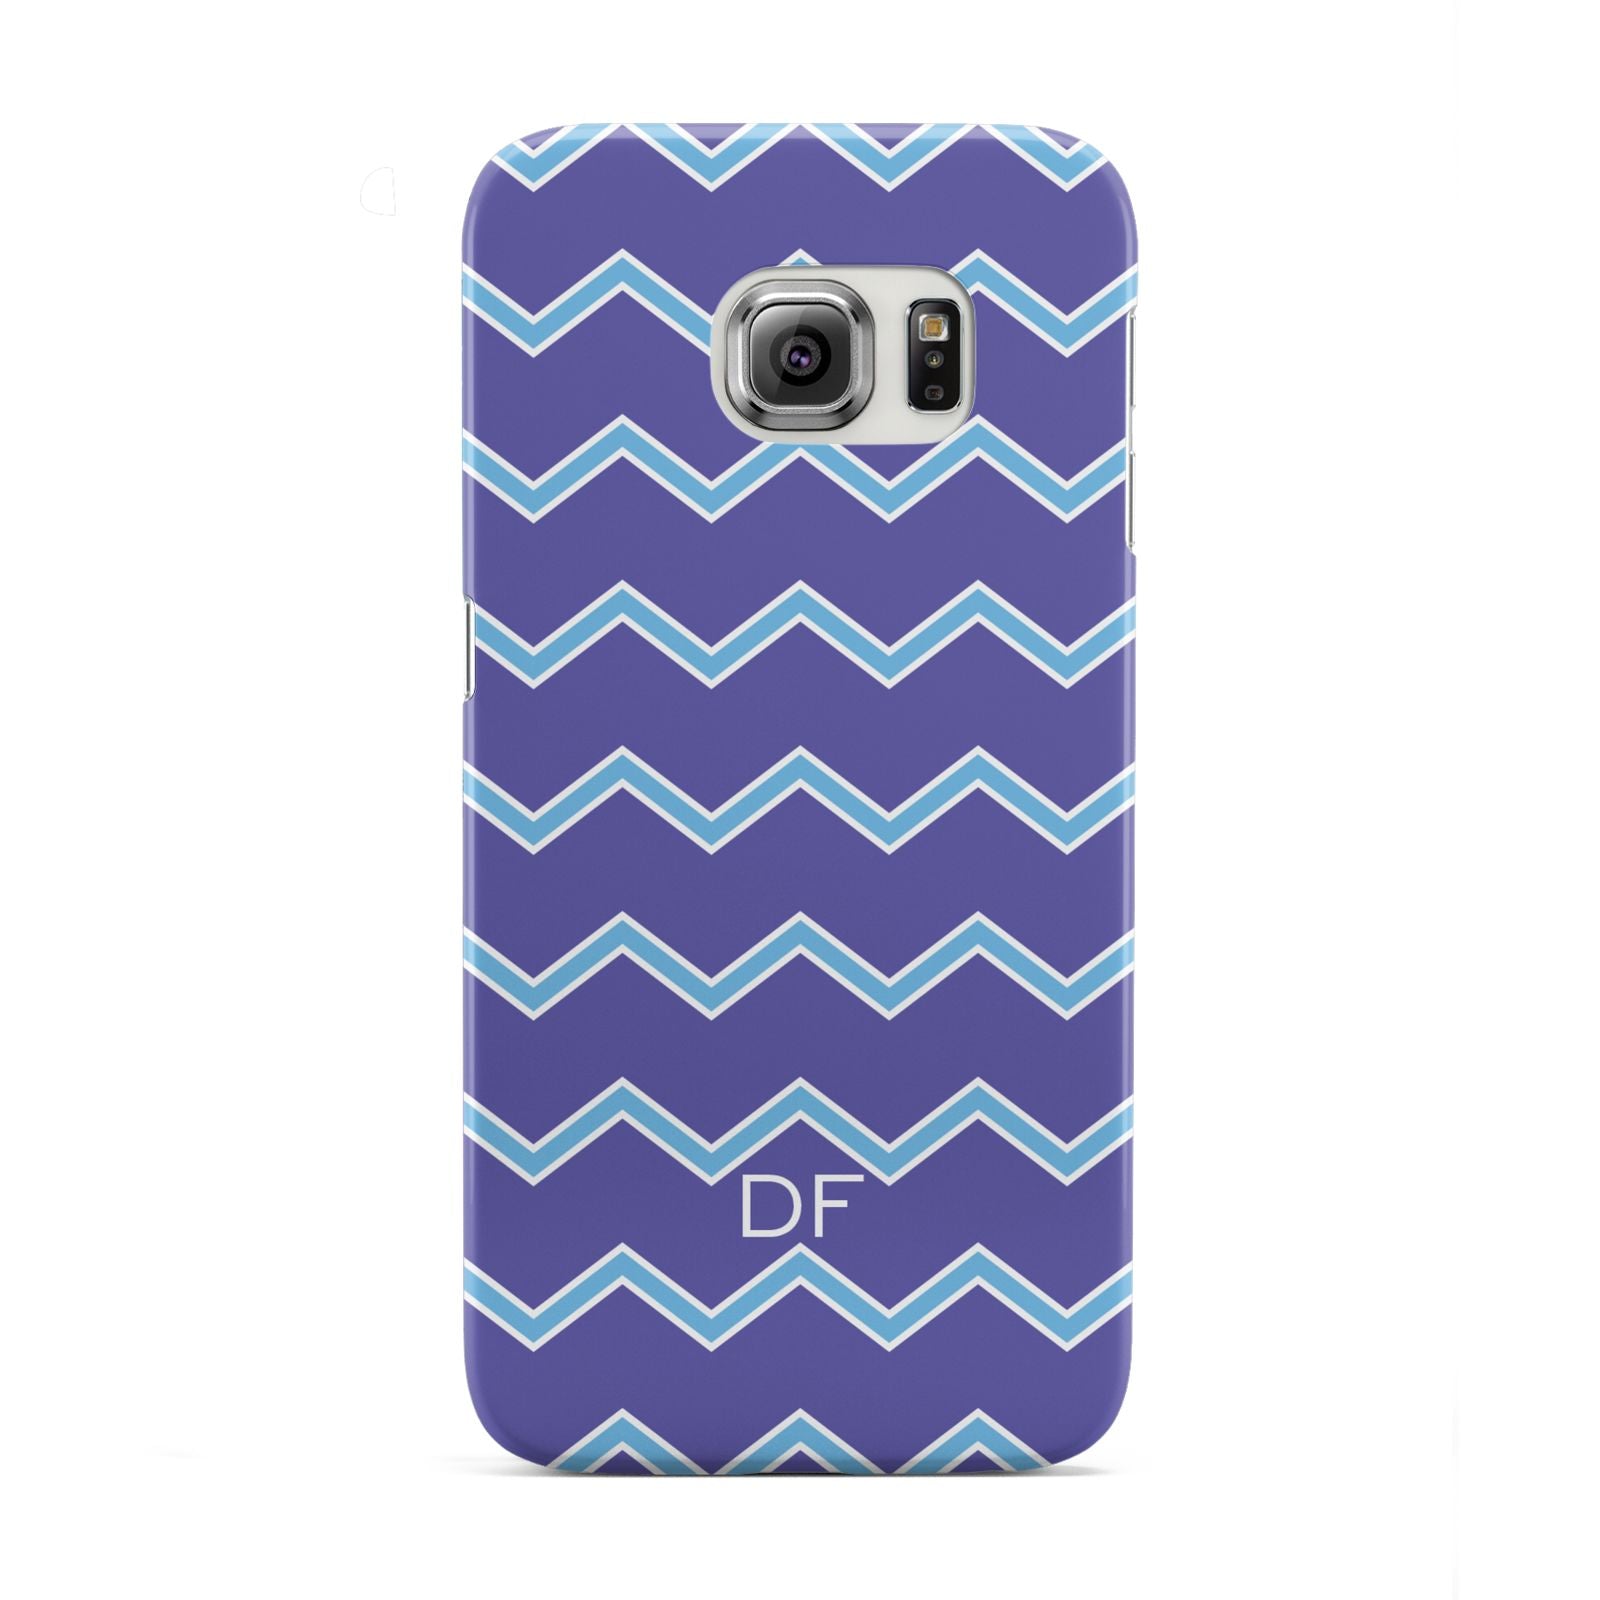 Personalised Chevron 2 Tone Samsung Galaxy S6 Edge Case